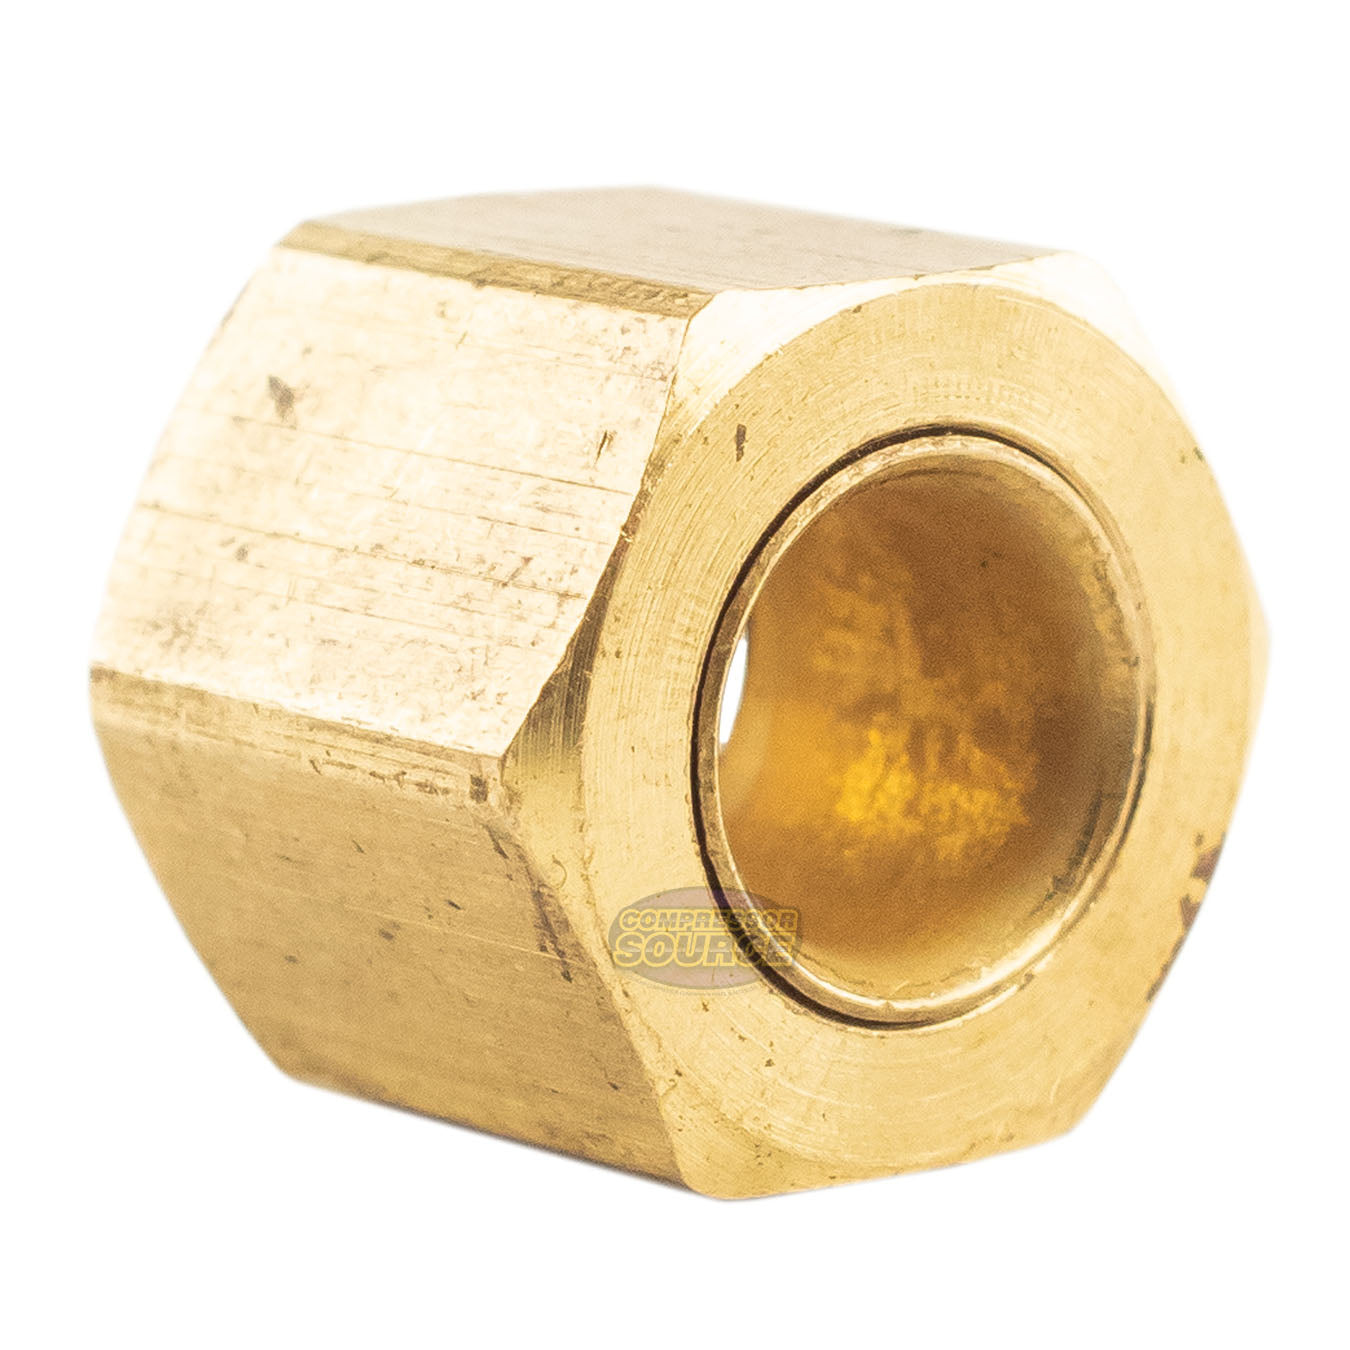 1/4 Compression Nut & Ferrule Combo for 1/4 OD Tube Brass Captive Sleeve  Nut